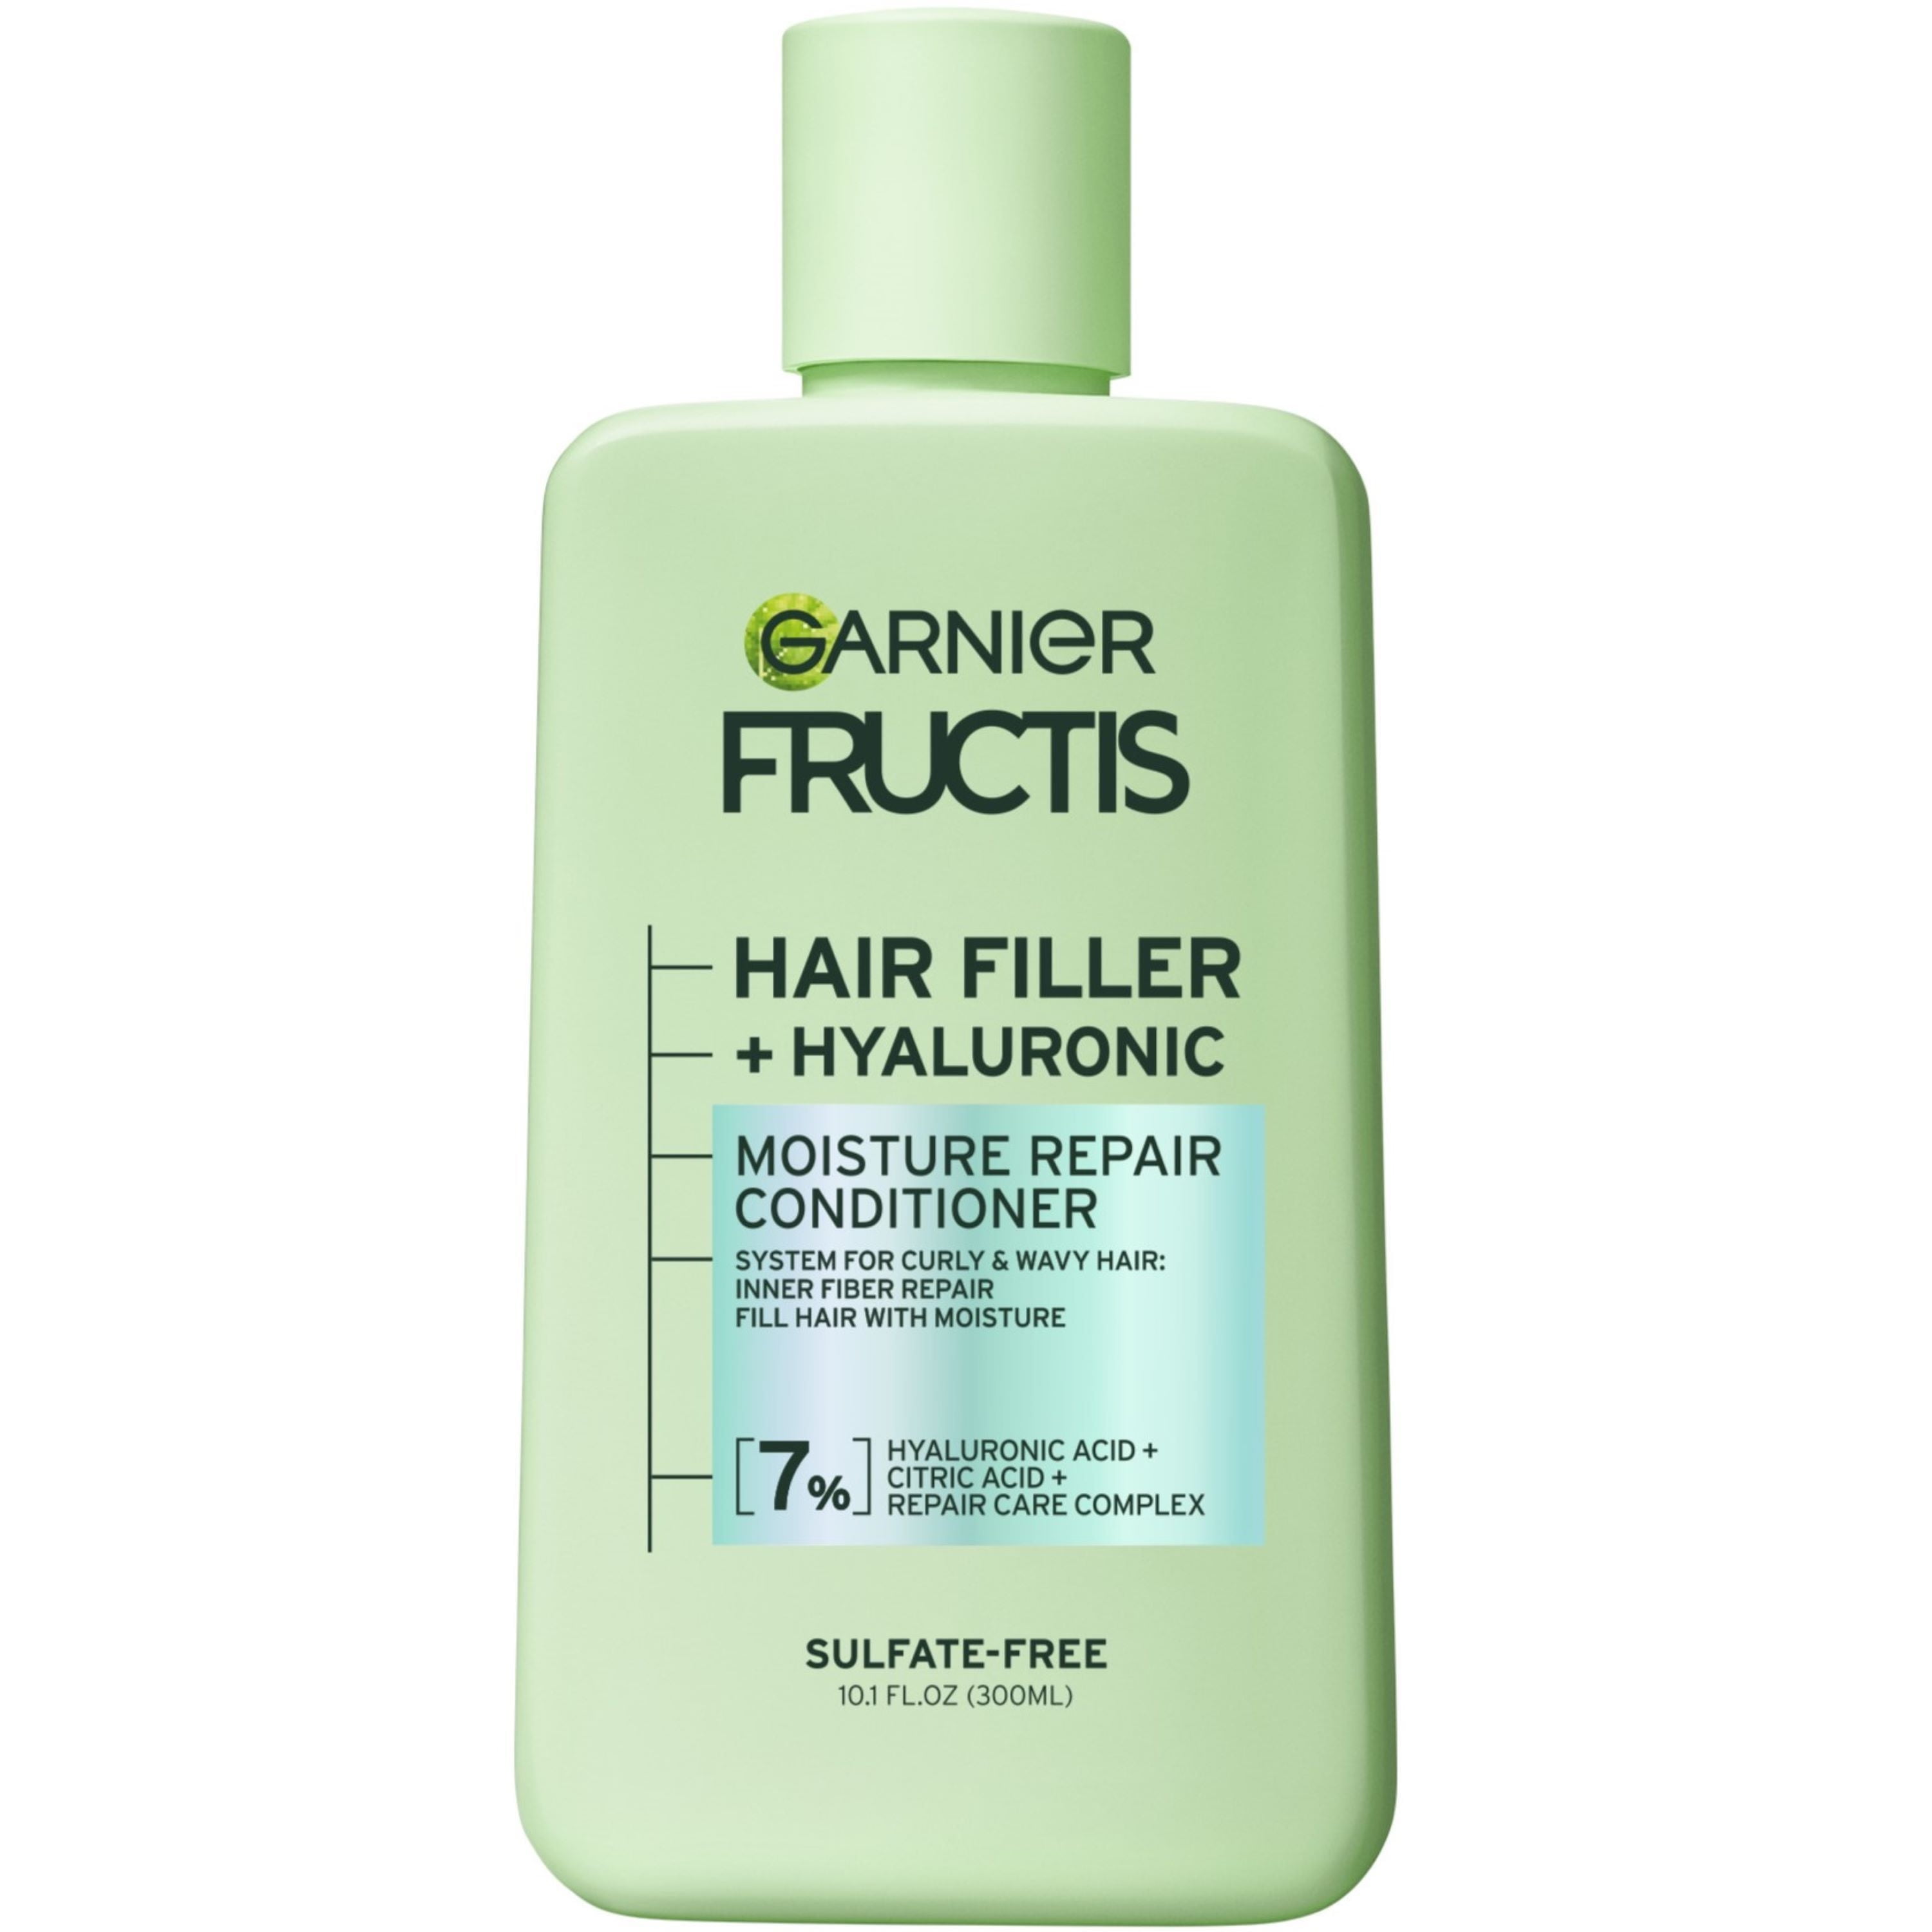 Conditioner Hair Hyaluronic oz Acid, Repair Moisture 10.1 Garnier fl with Fructis Filler